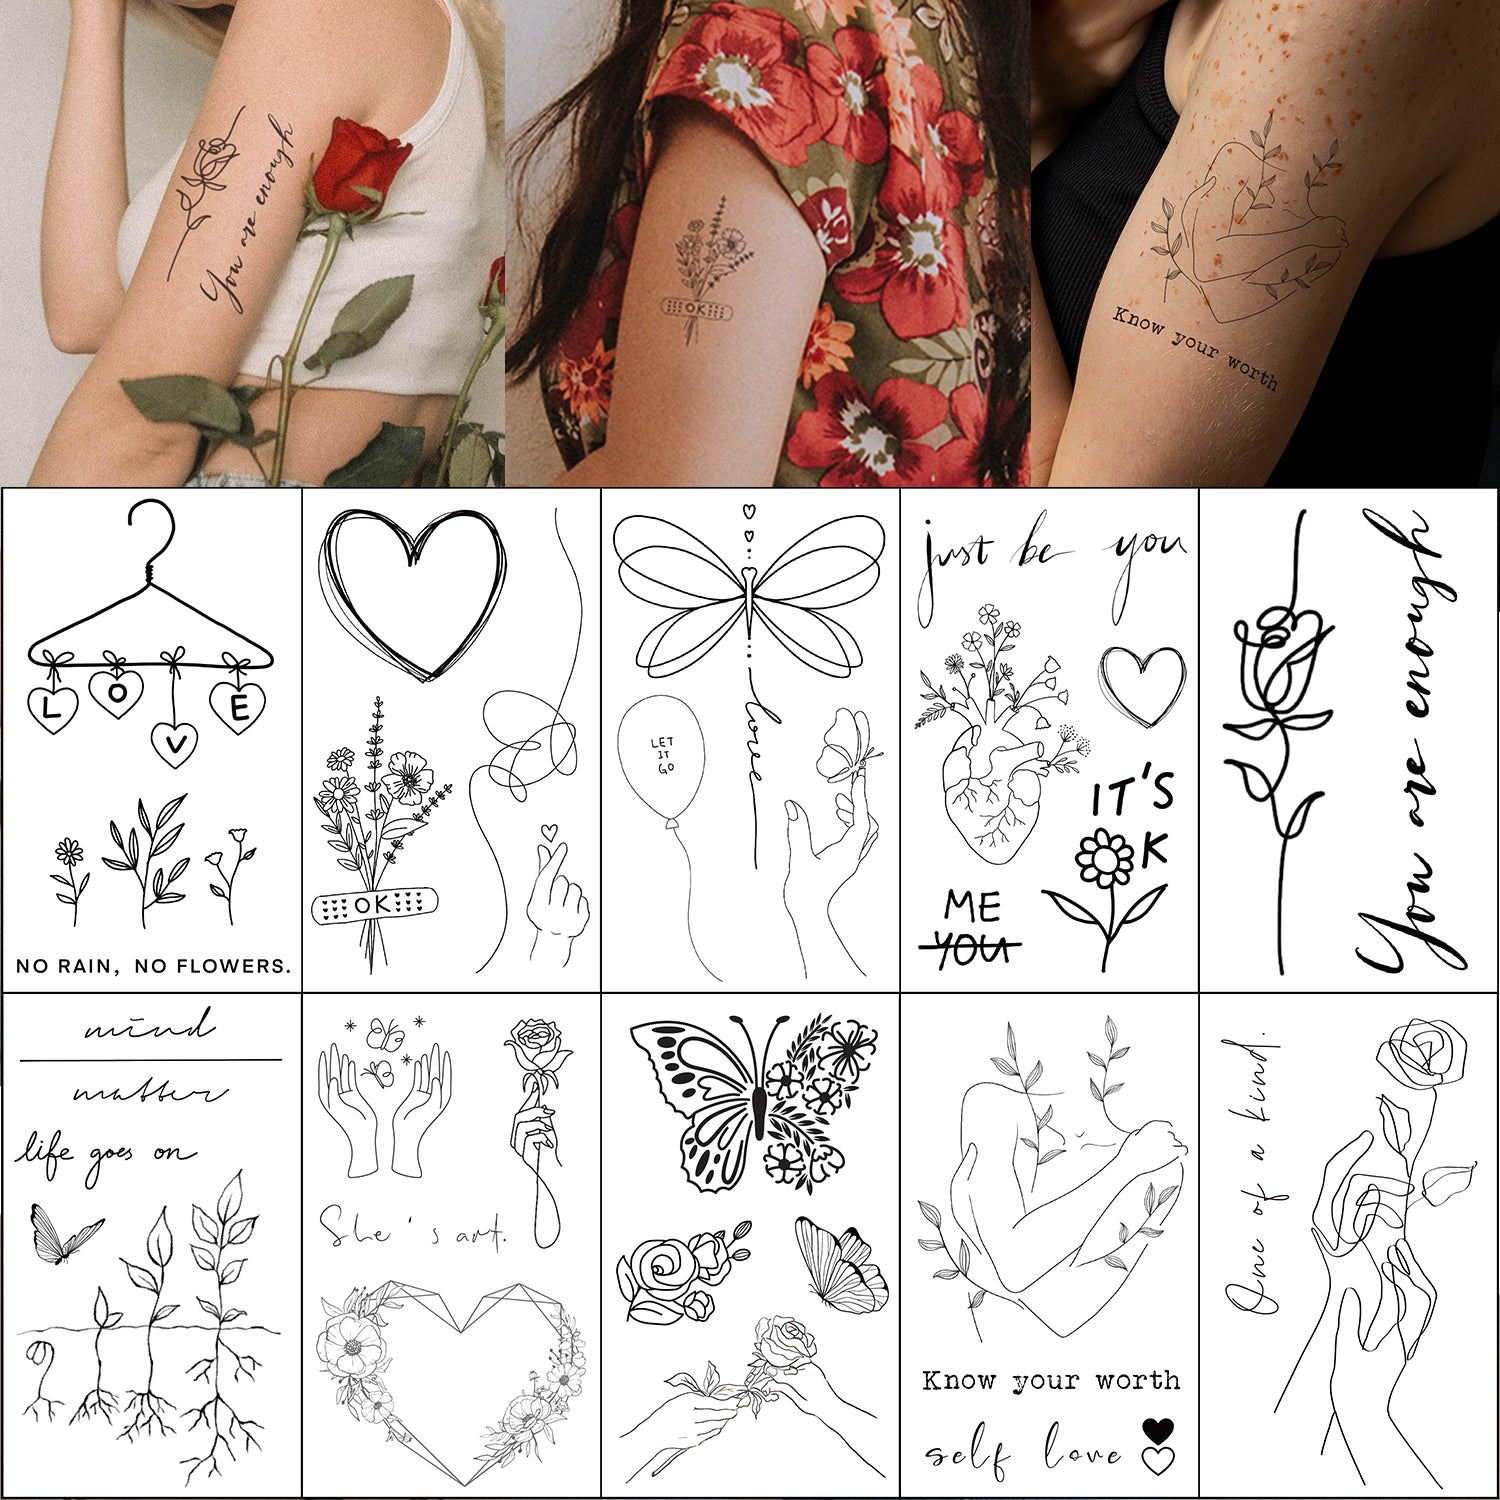 Tiny Sexy Tattoos | POPSUGAR Love & Sex